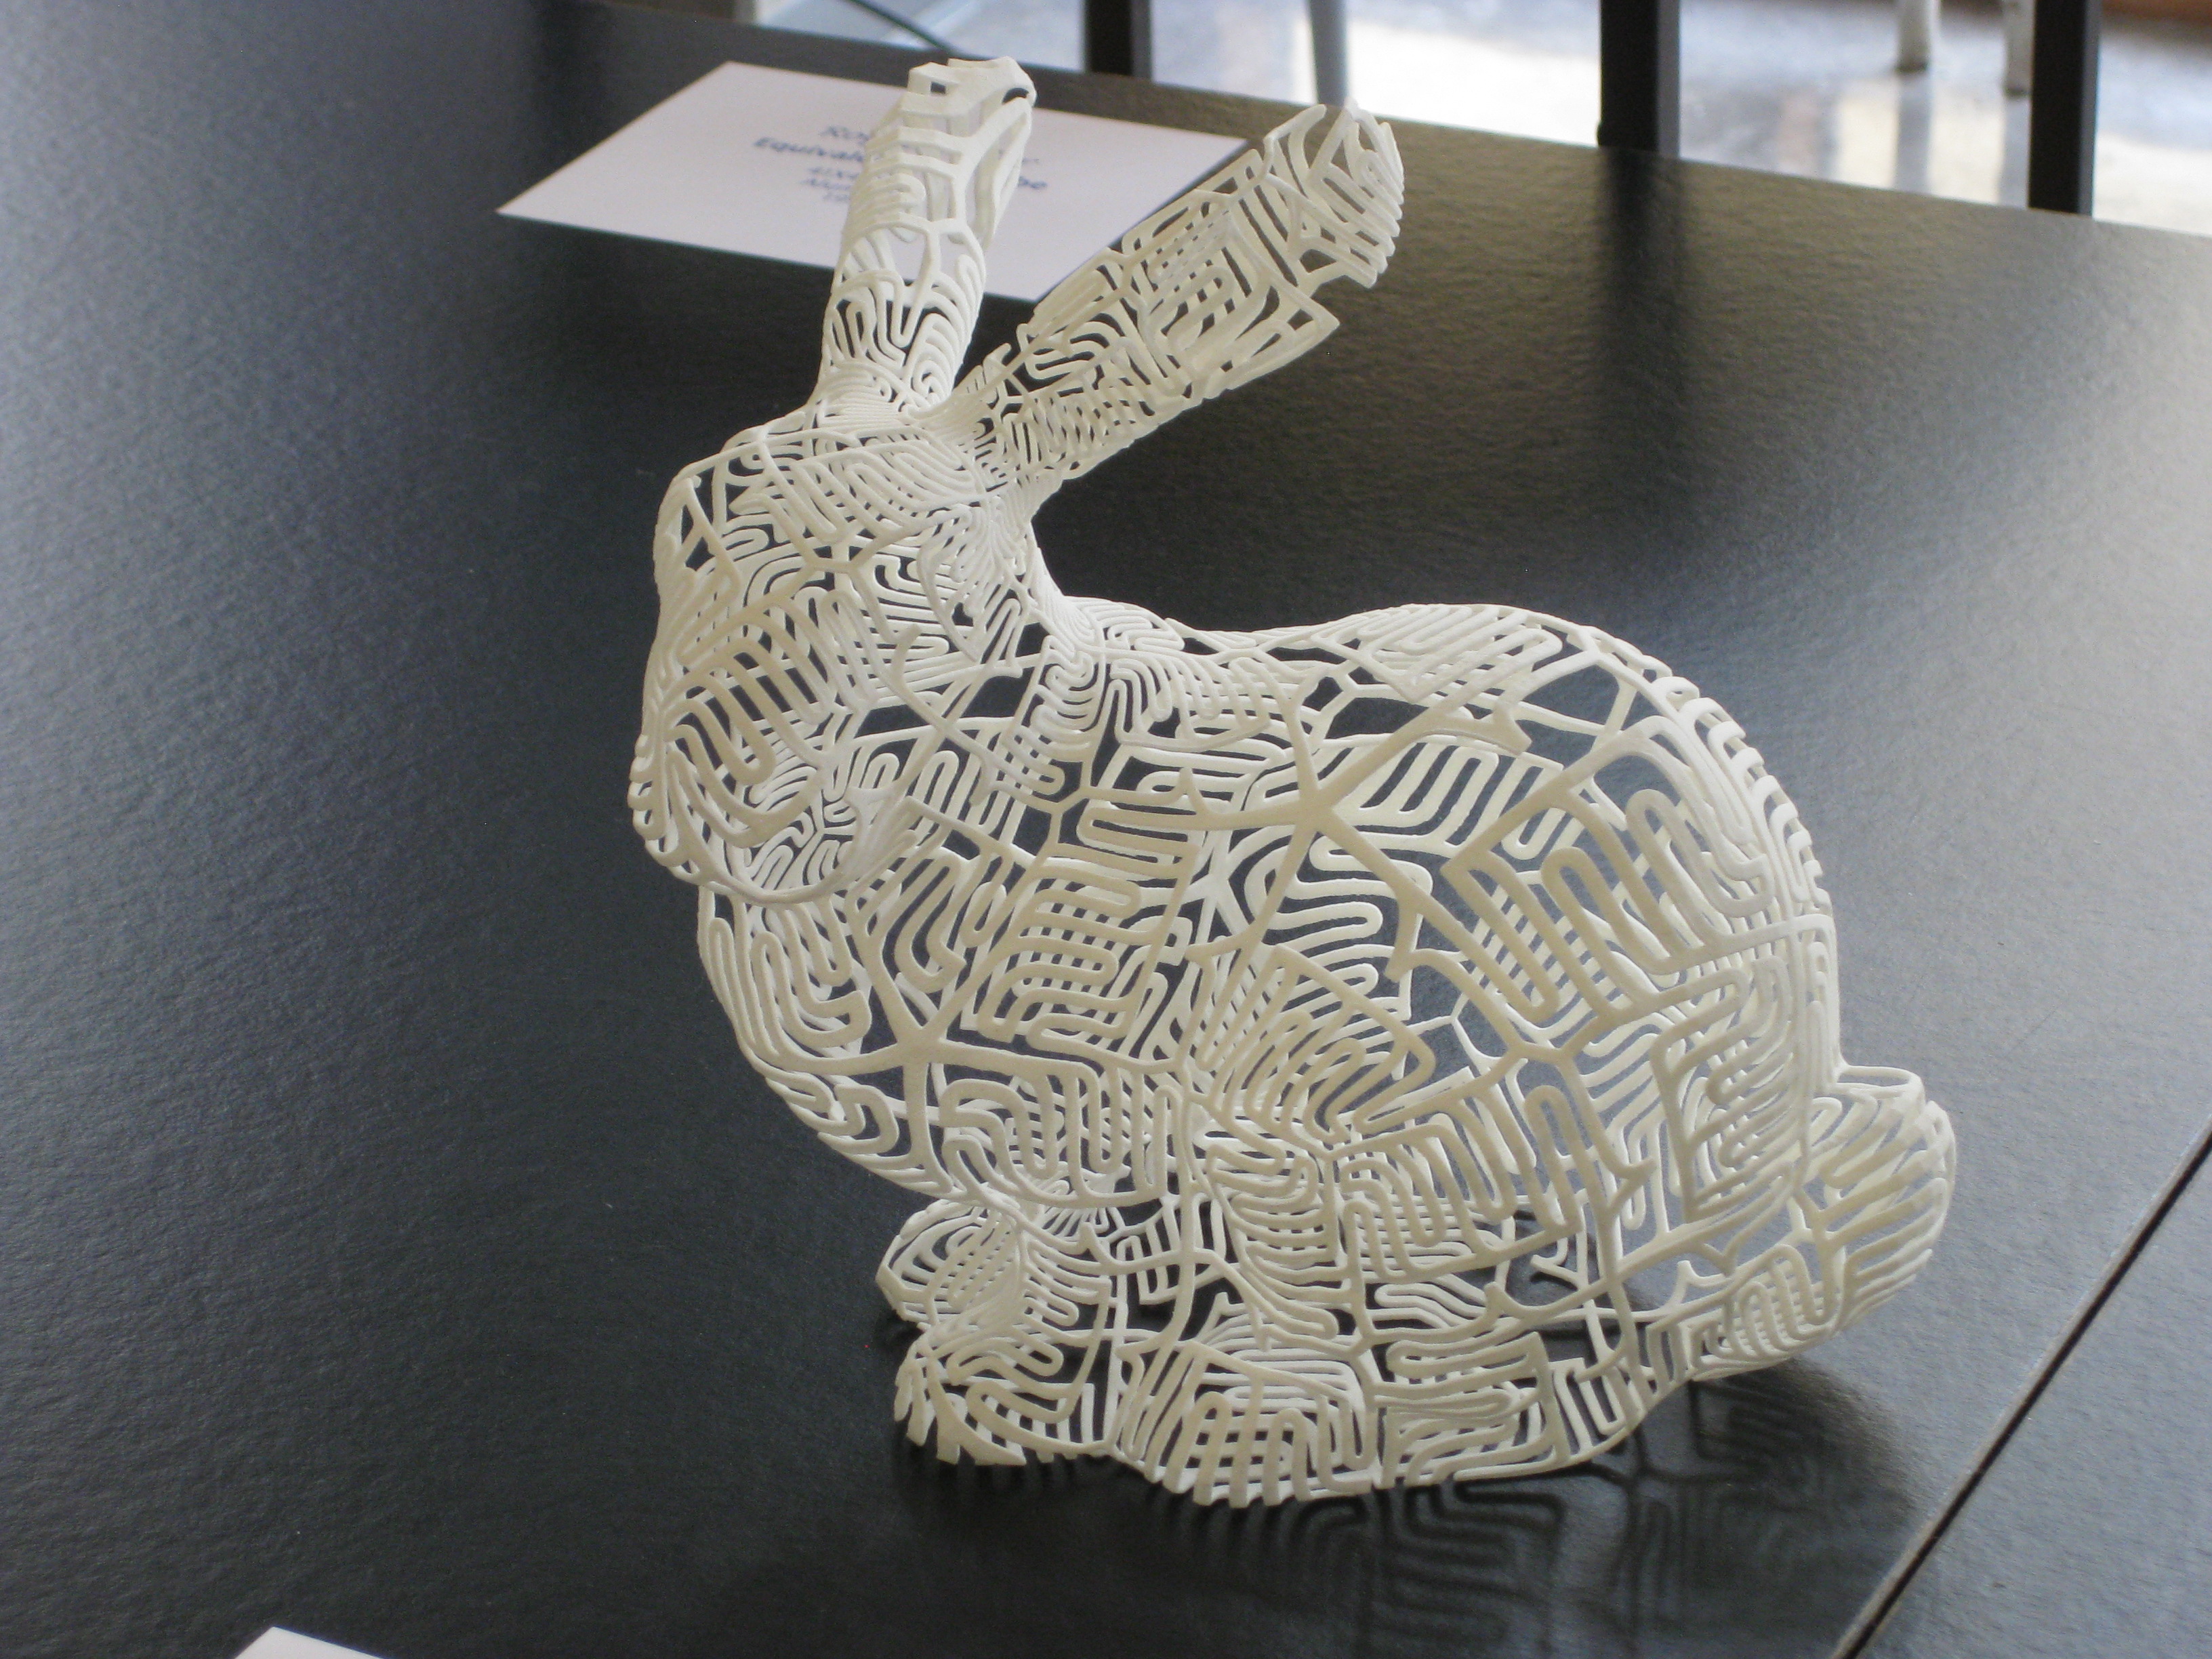 "Bunny, Bunny" by
                Segerman & Kaplan